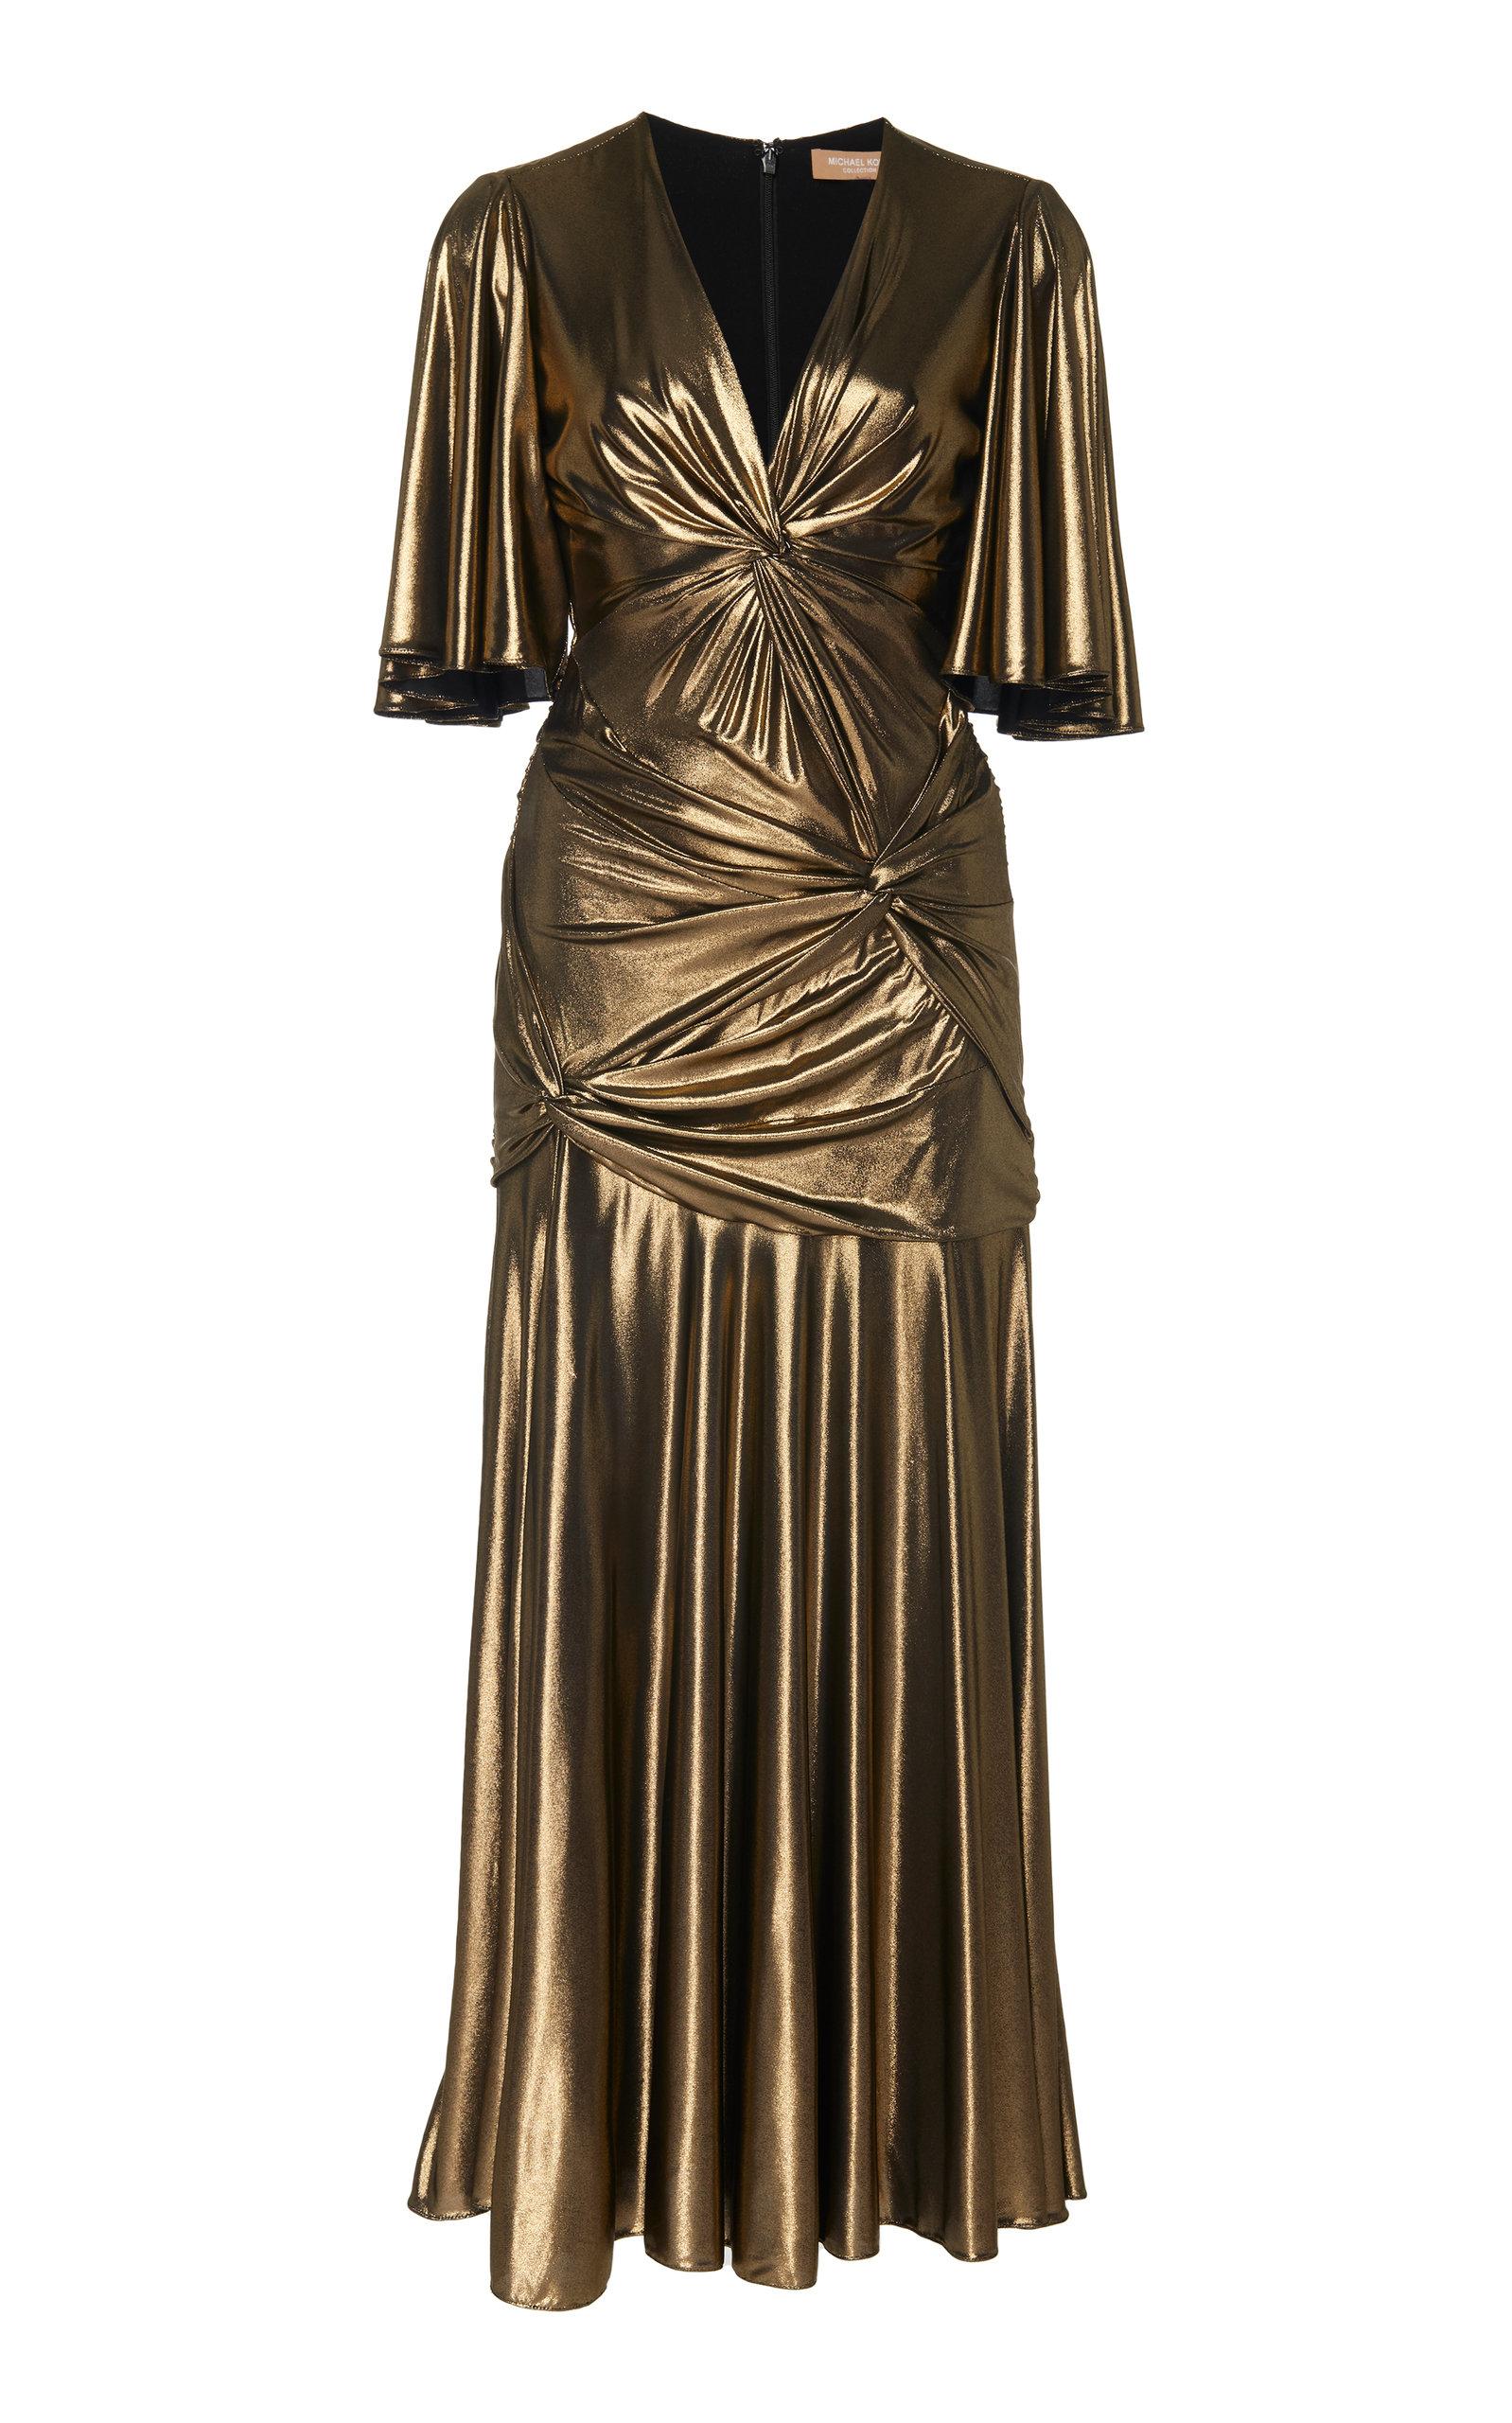 michael kors knotted metallic dress